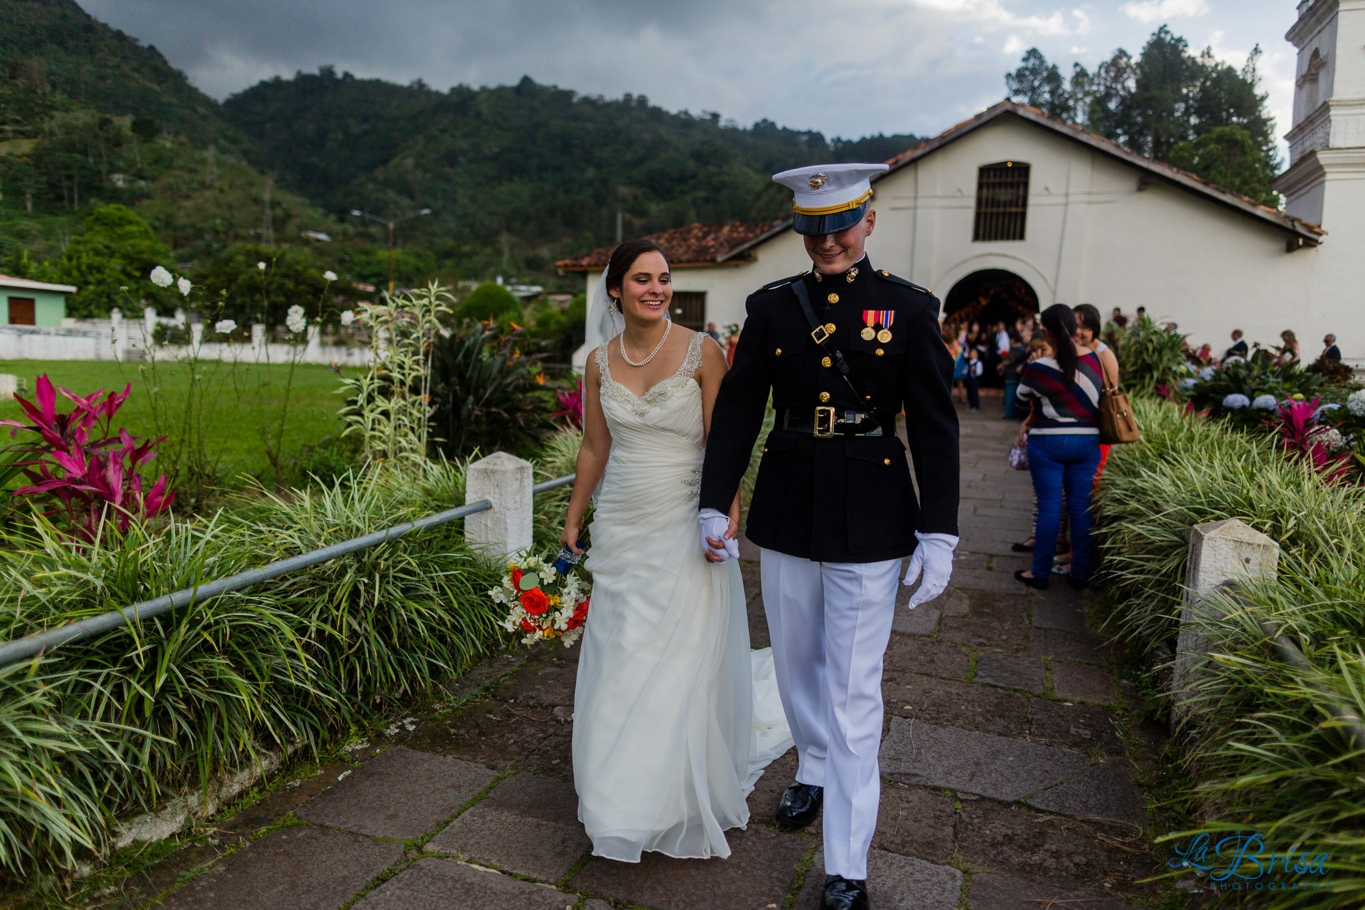 Costa Rica Destination Wedding Photographer